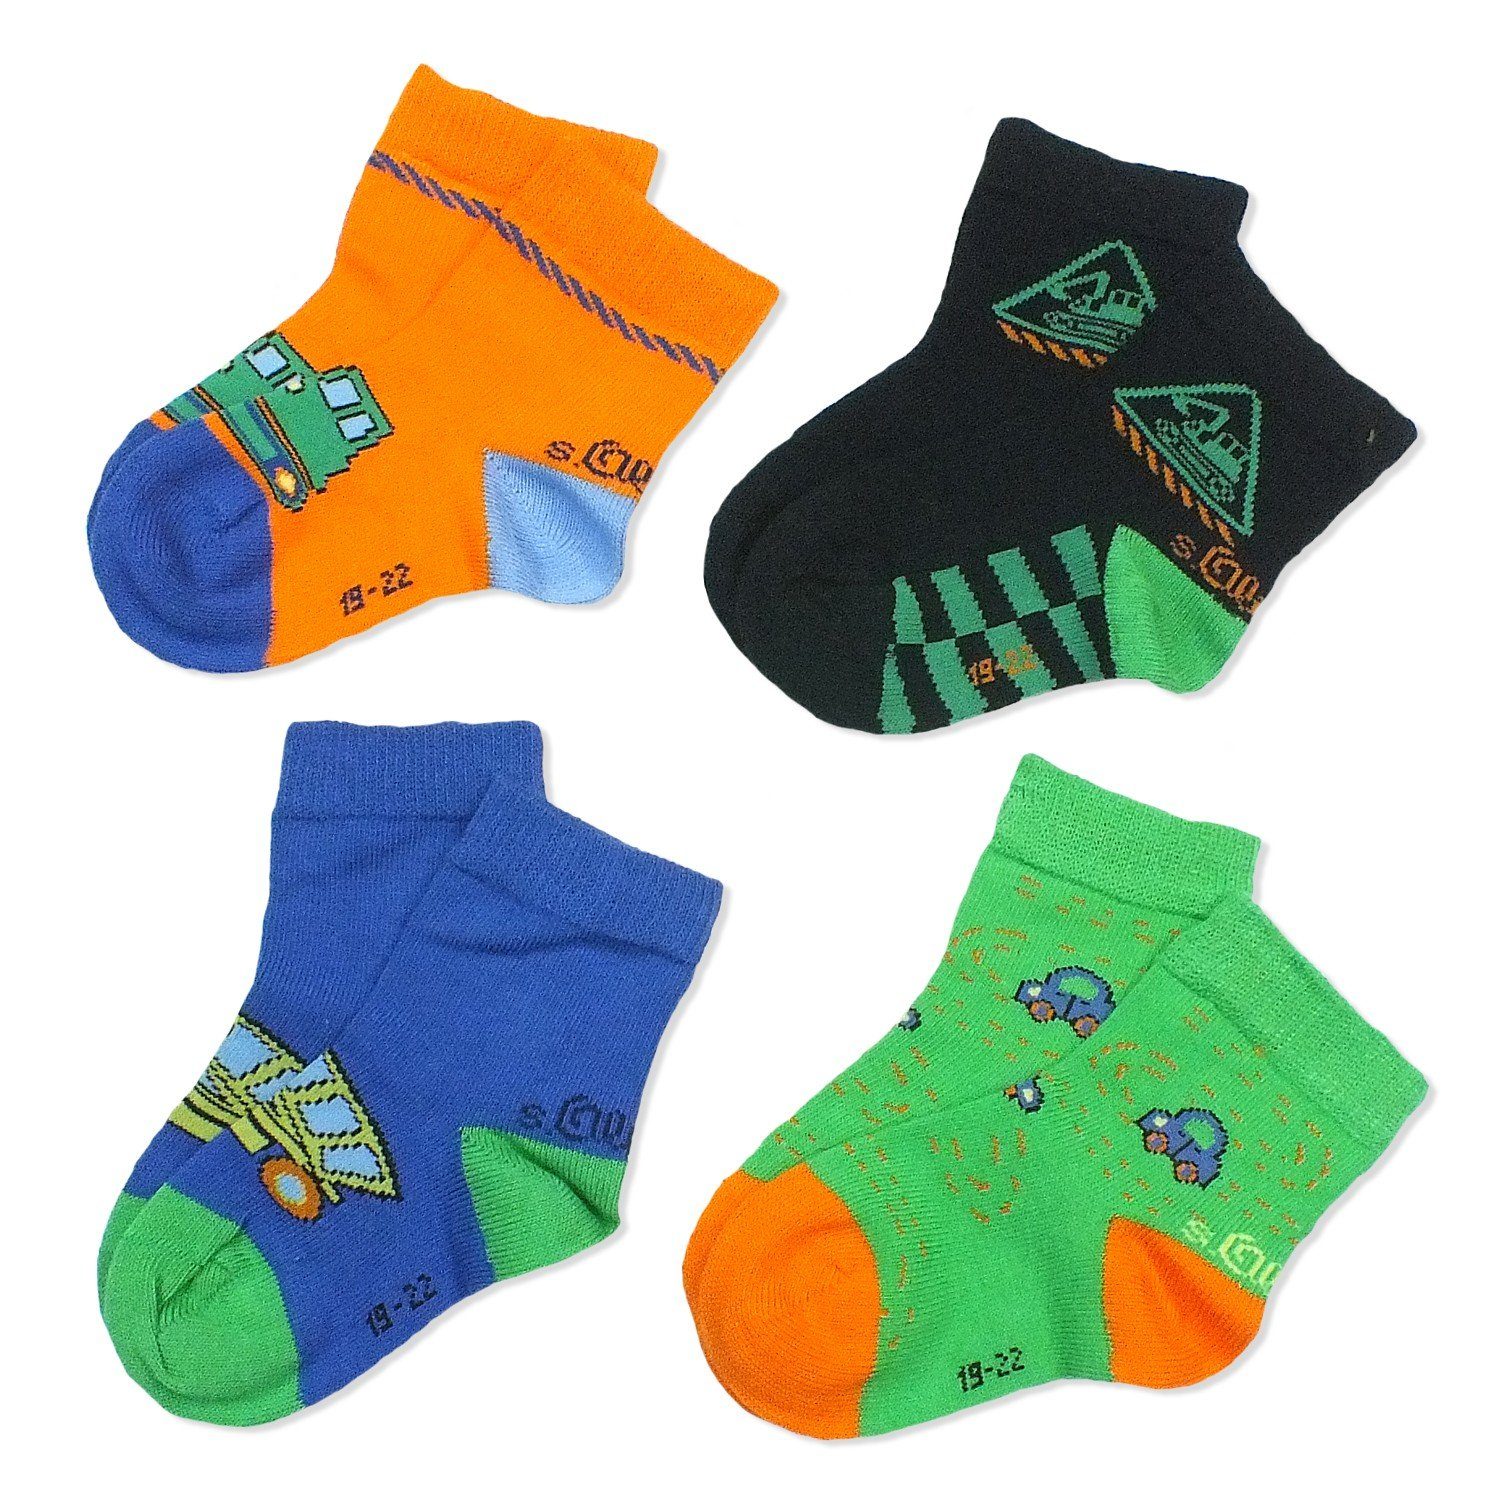 s.Oliver Langsocken S20318 (Set, 4-Paar, 4 Paar) Kinder Socken, Baby Jungen & Mädchen mit Baumwolle, Kindersocken